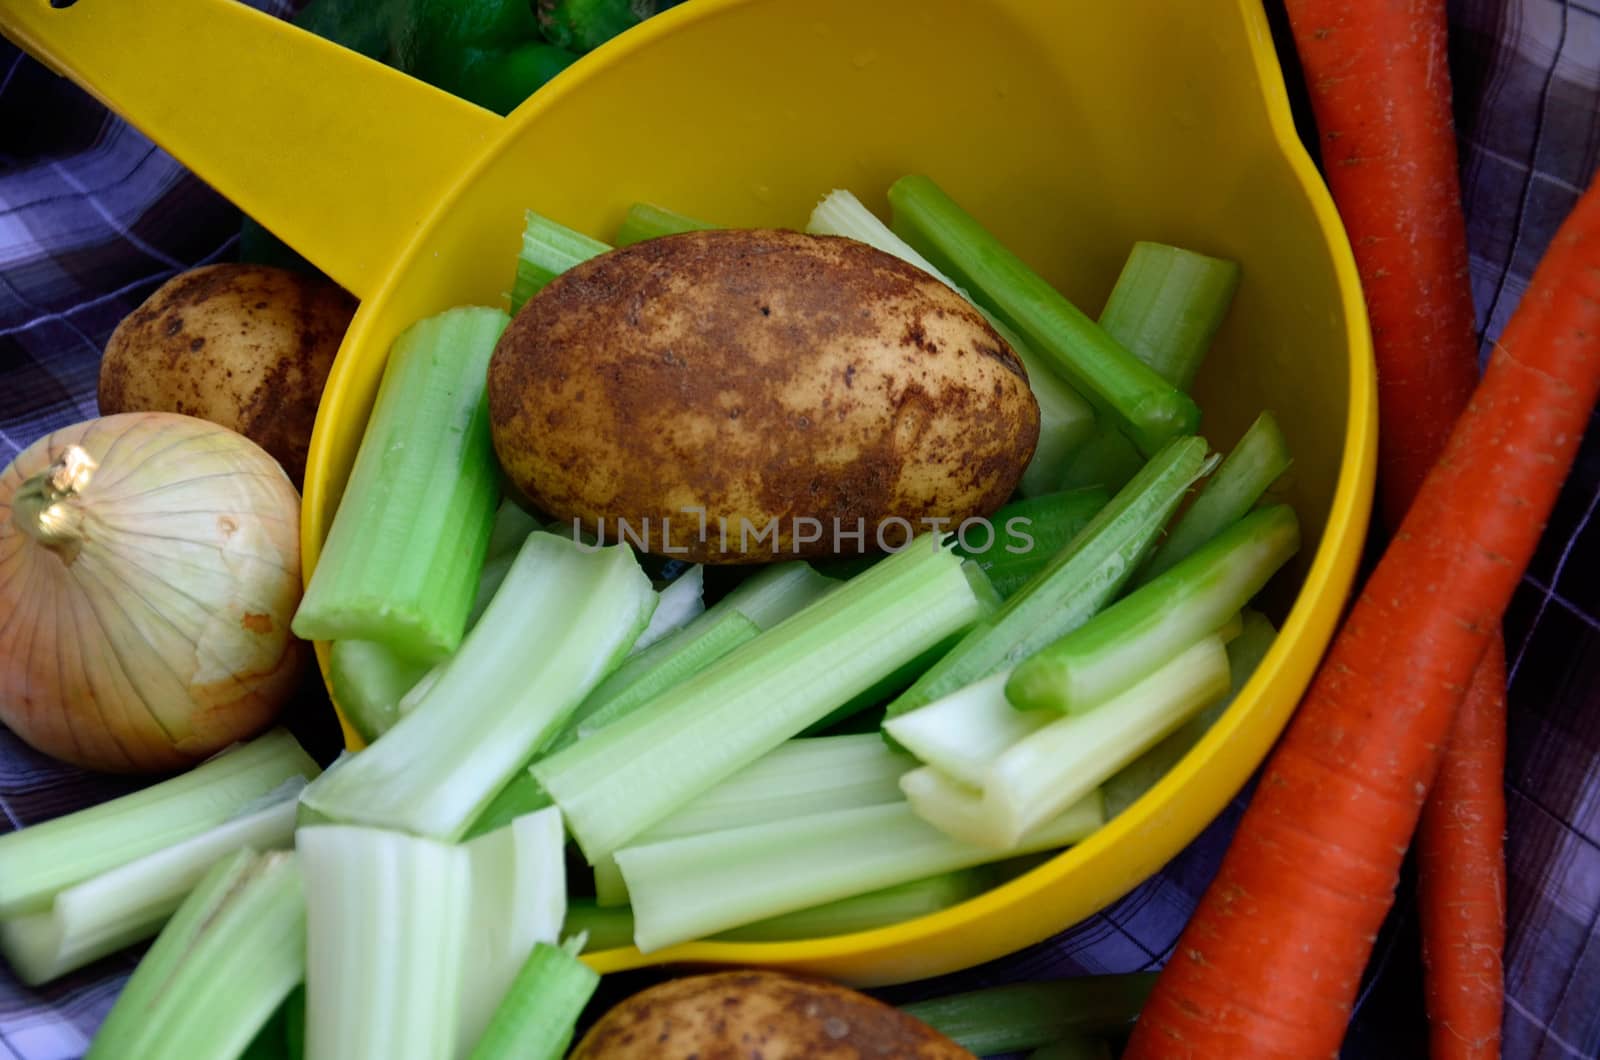 Potatoes, carrots, celery, and an onion